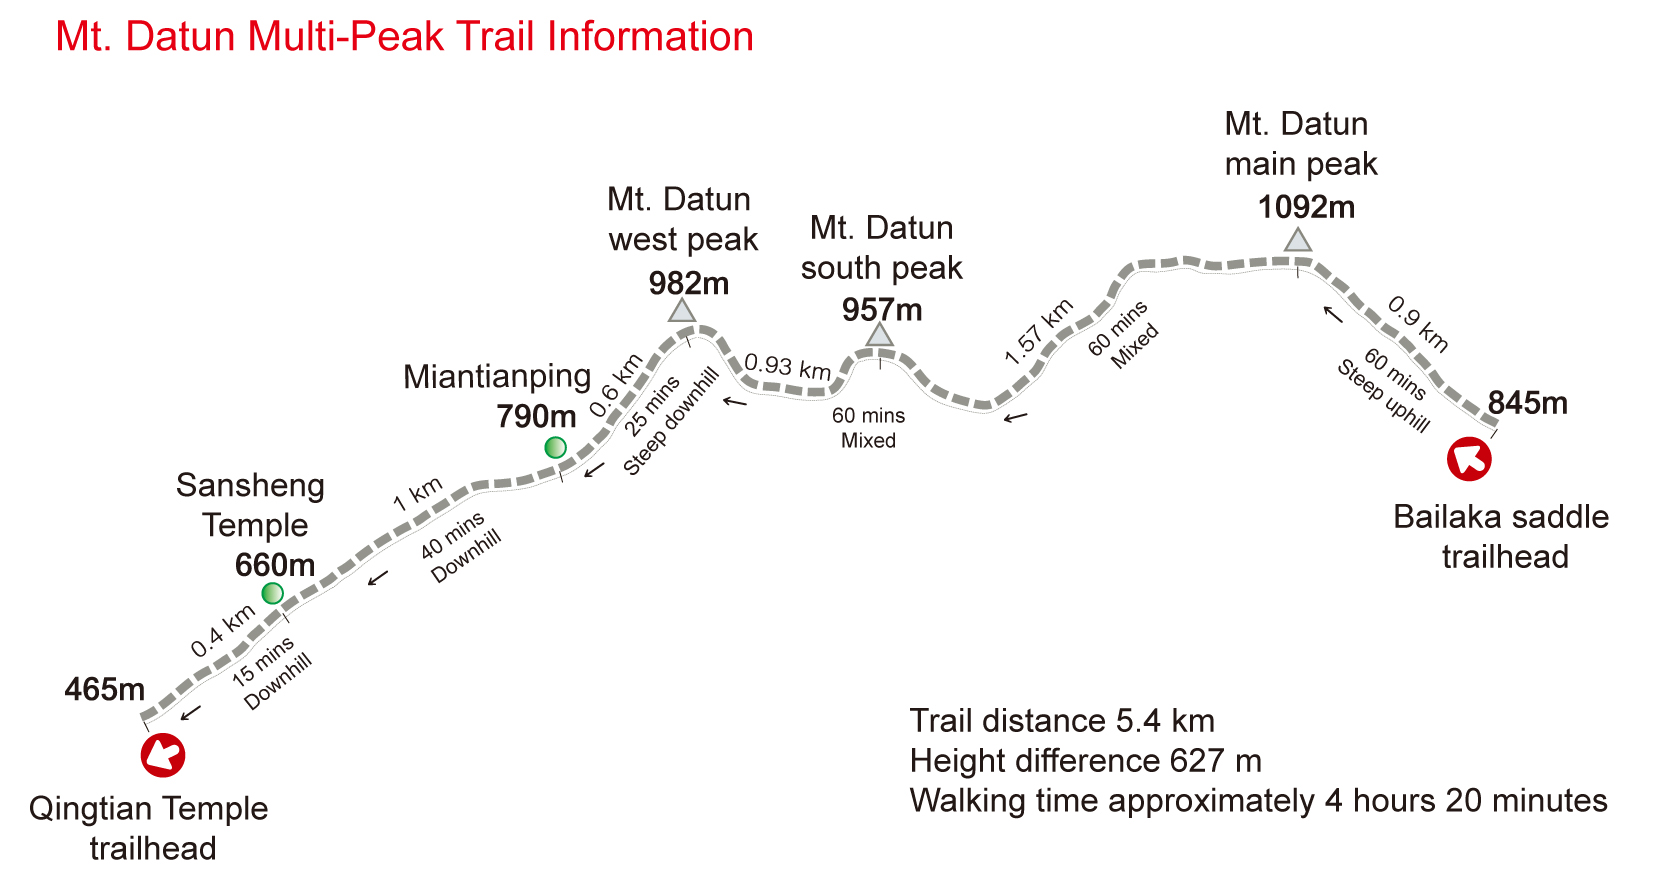 Mt. Datun Multi-Peak Trail